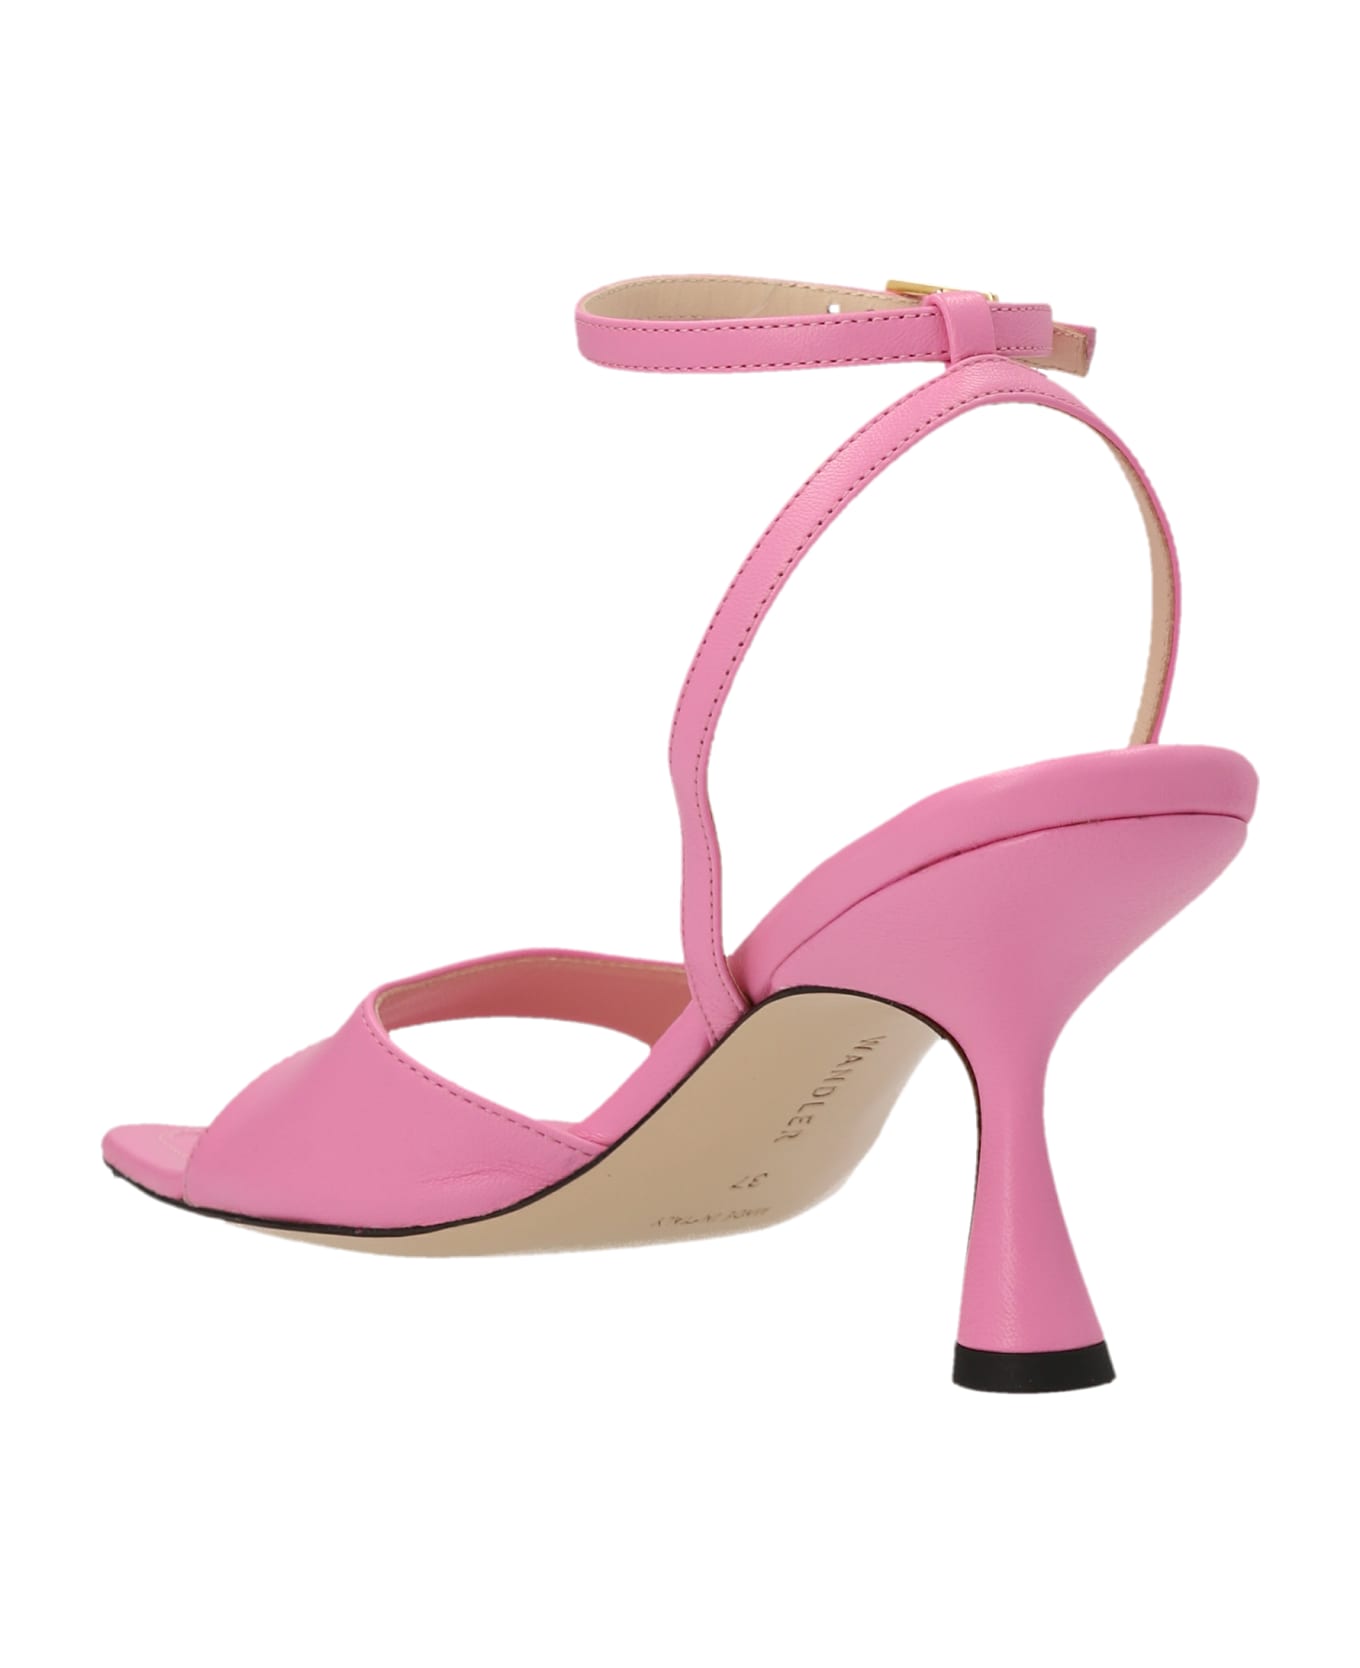 Wandler 'julio' Sandals - Pink サンダル